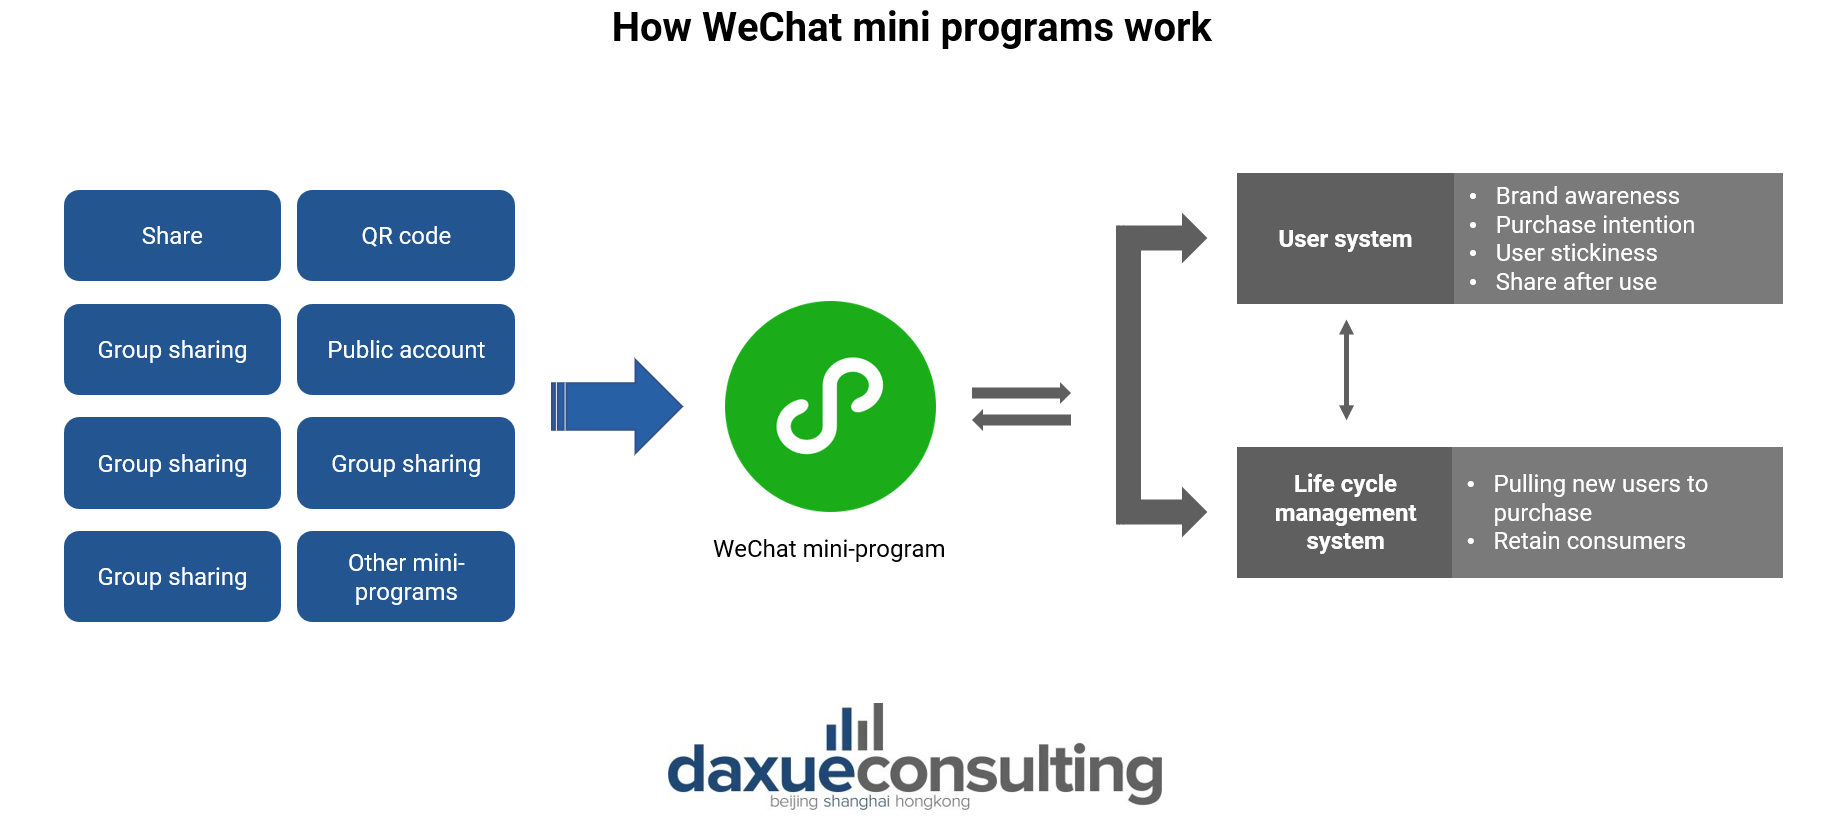 how wechat mini programs work